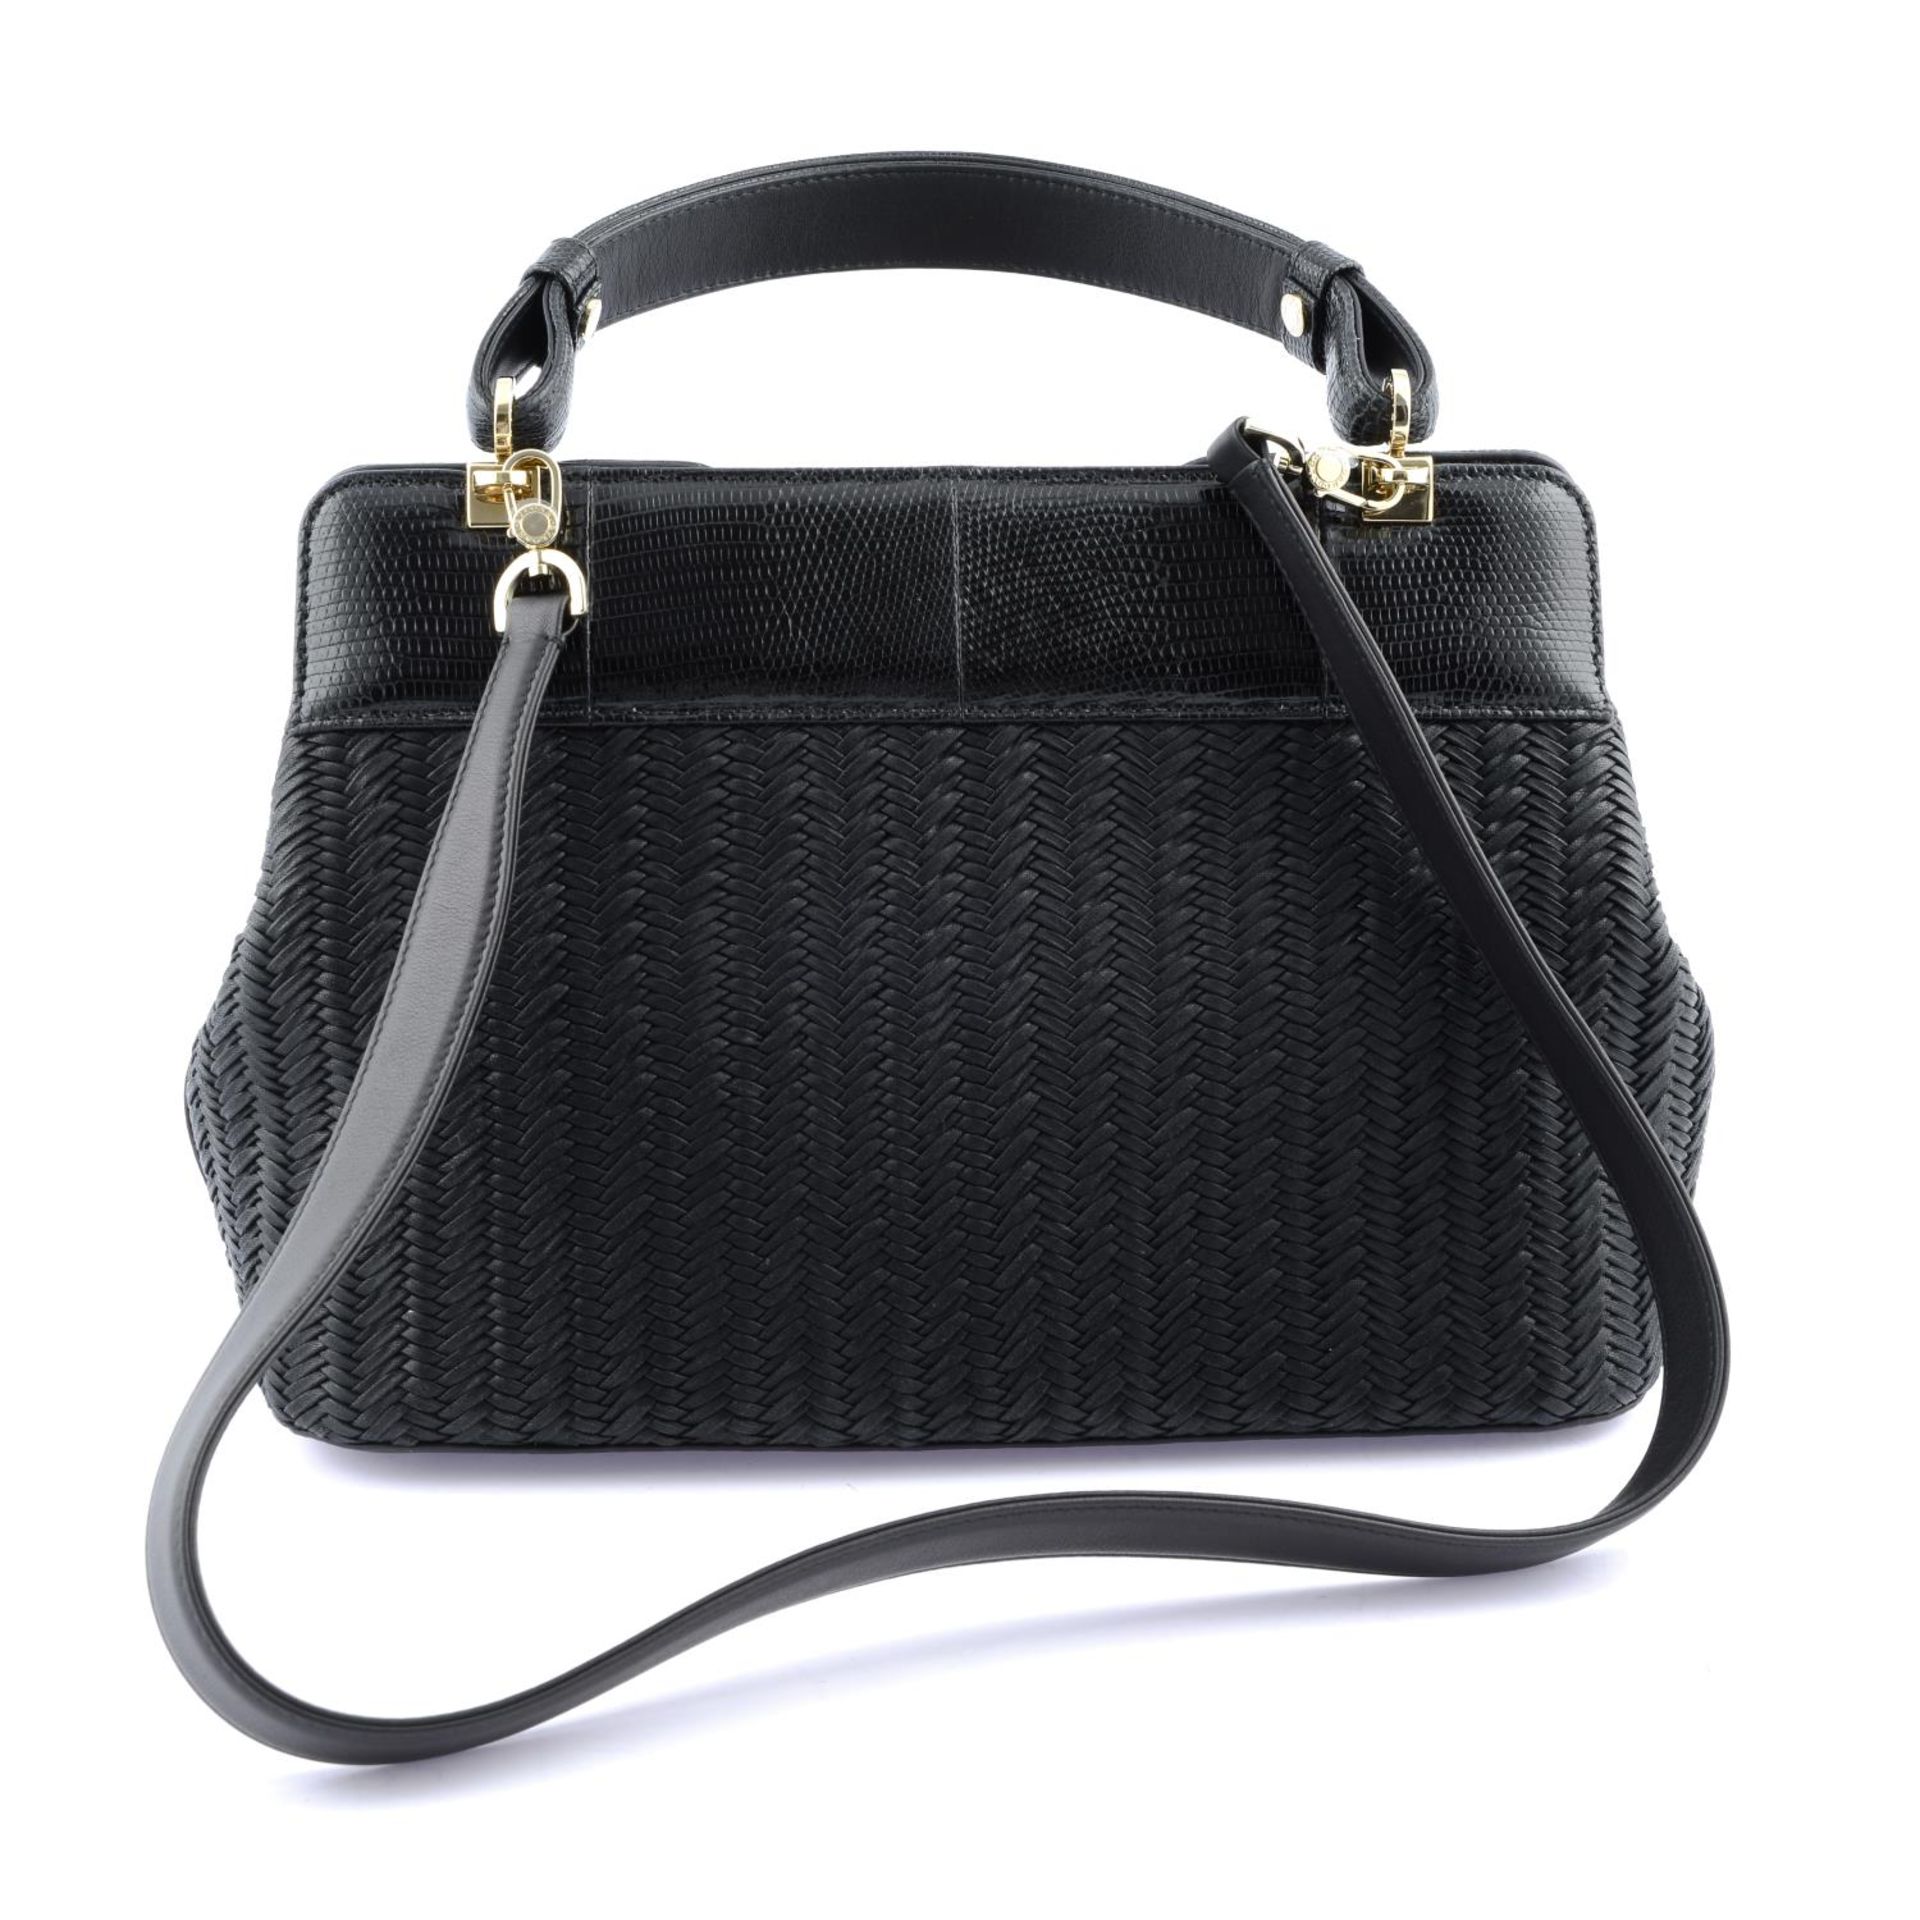 BULGARI - a woven leather Isabella Rossellini handbag. - Bild 2 aus 5